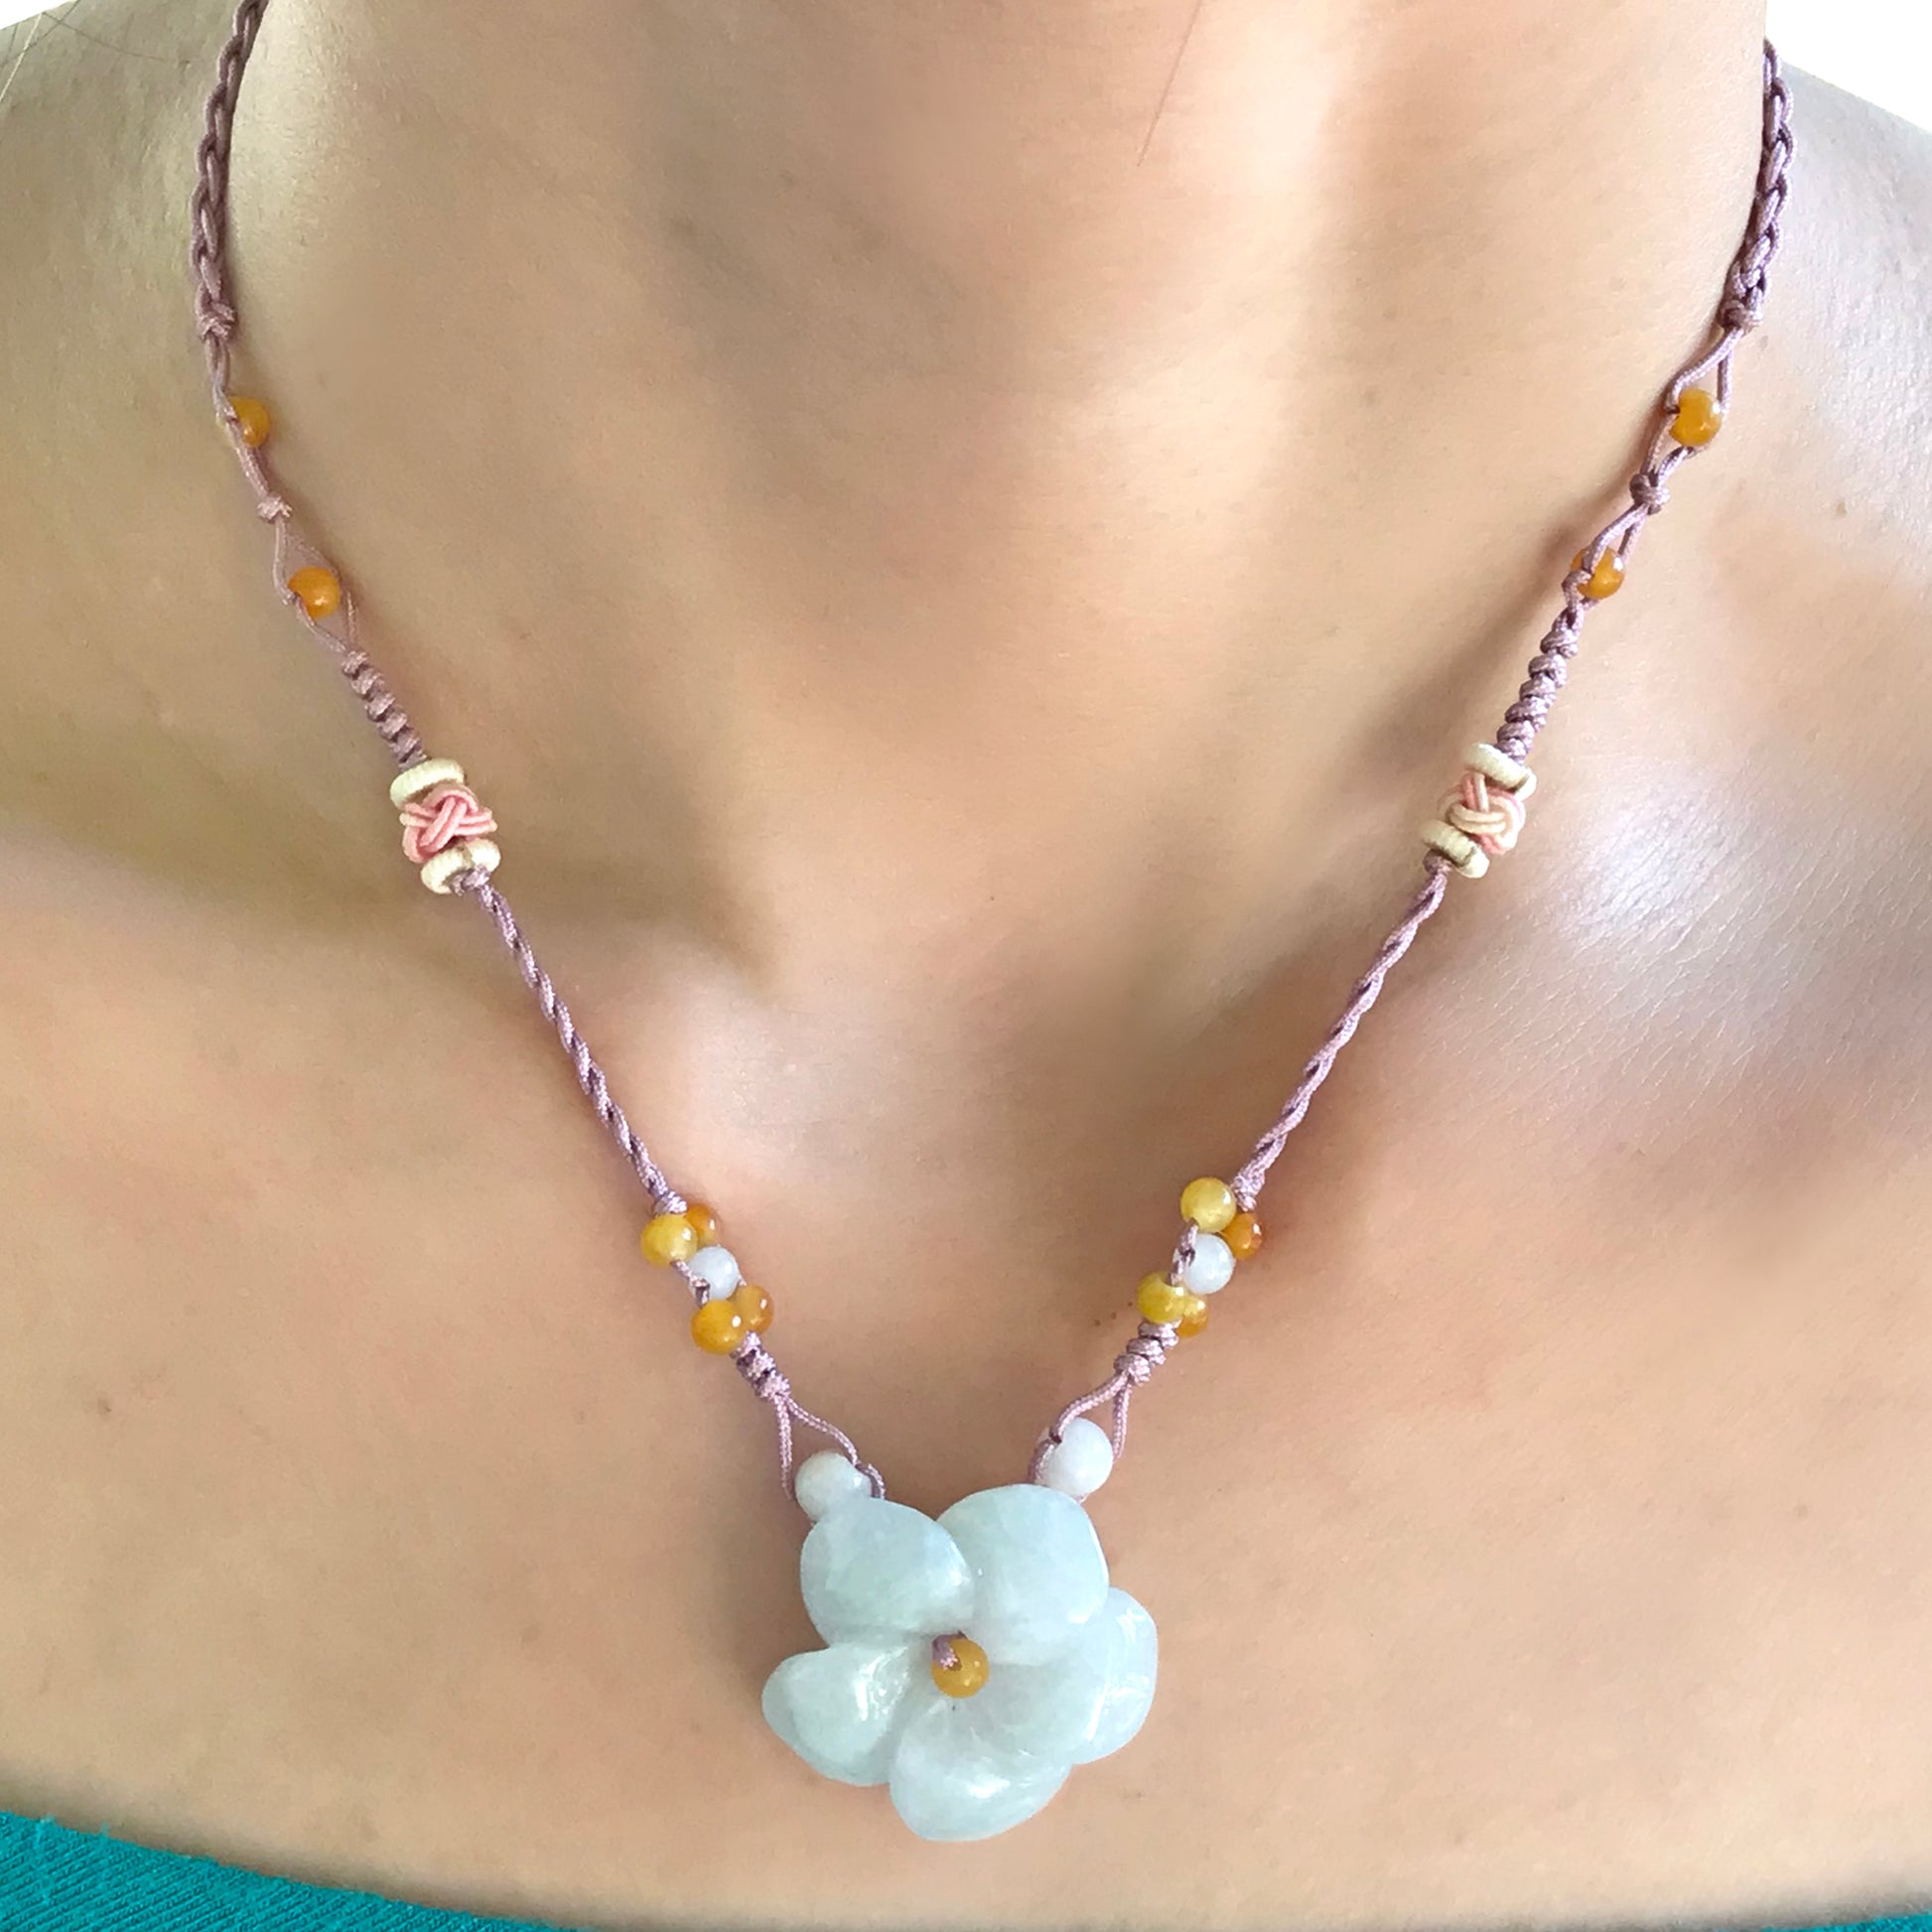 Feel Feminine with Clematis Flower Handmade Jade Necklace